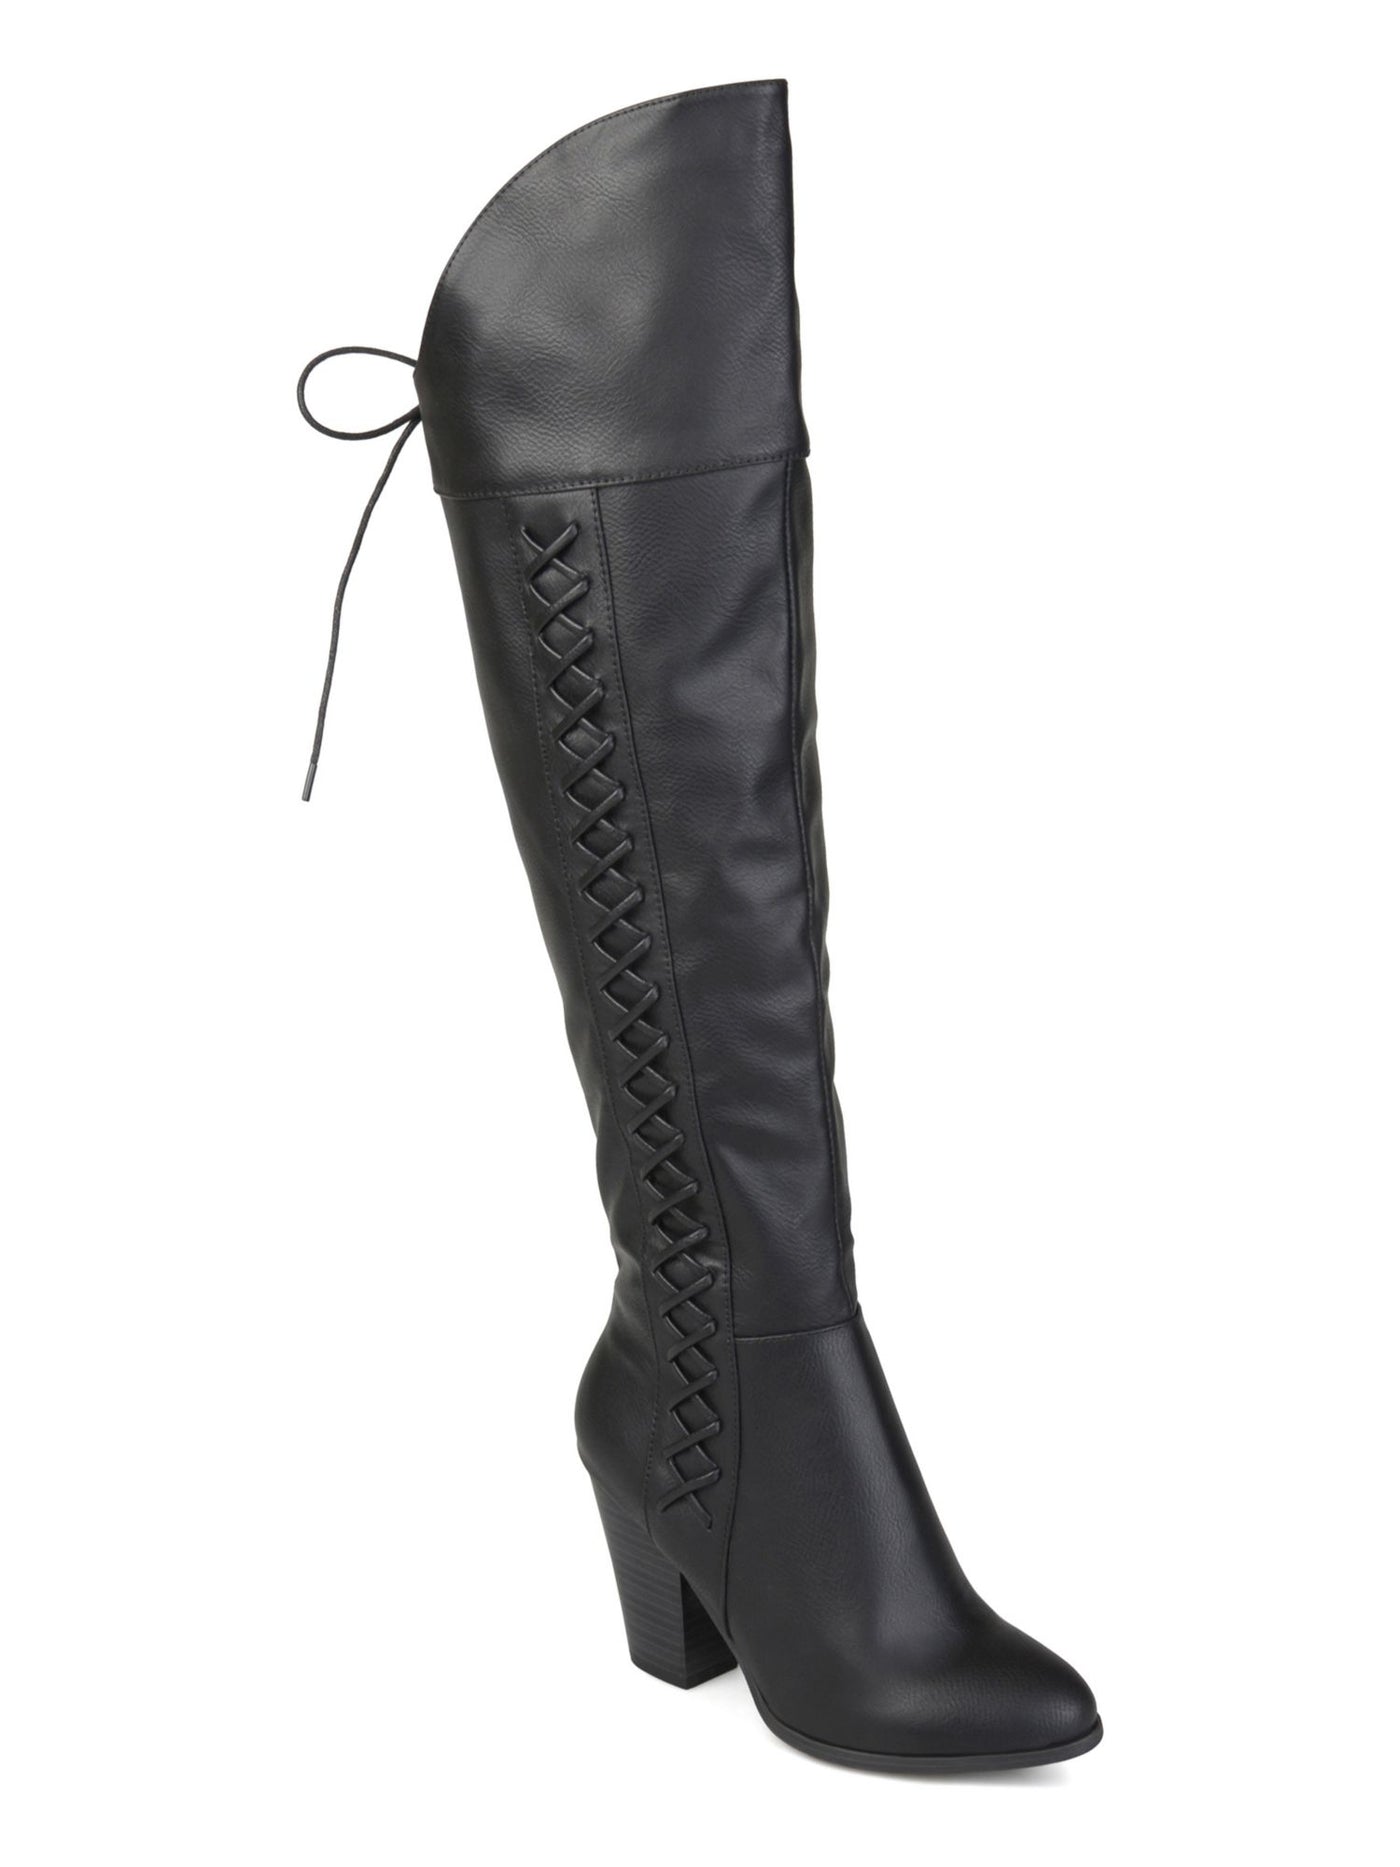 JOURNEE COLLECTION Womens Black Raised Vamp Lace Comfort Spritz Round Toe Block Heel Zip-Up Dress Boots 8 M